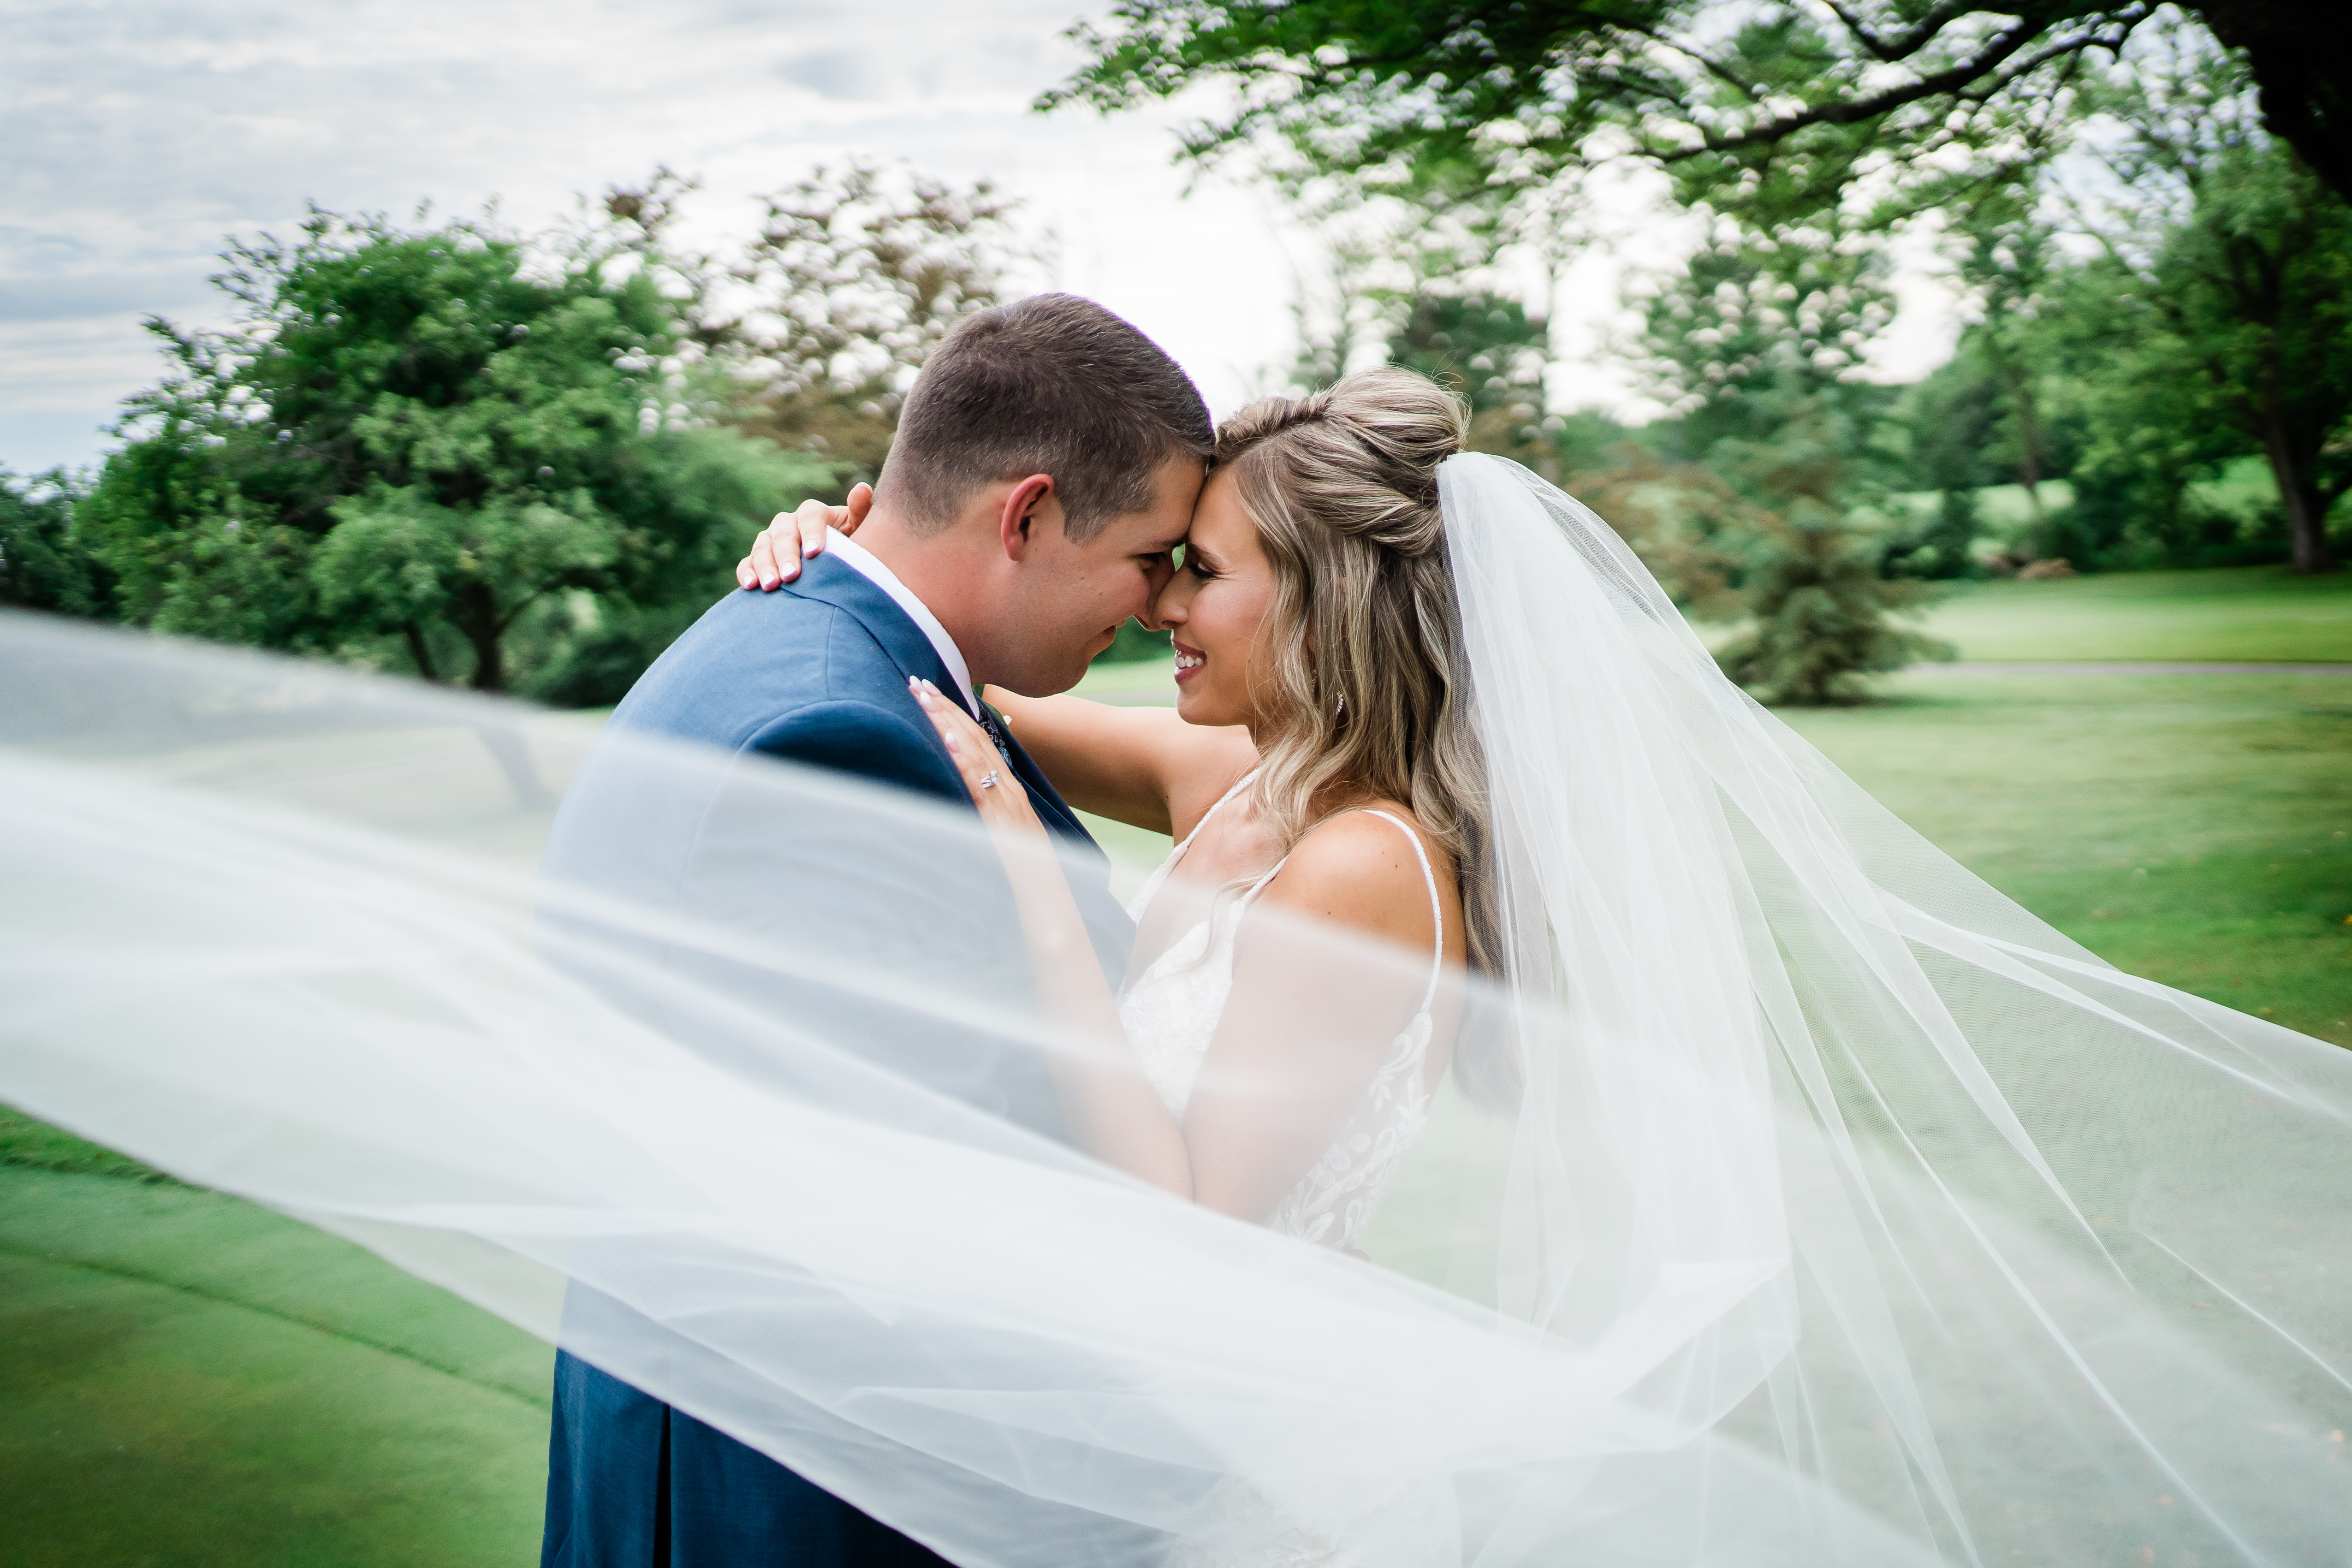 Fort wayne wedding photographer captures bride and groom embracing